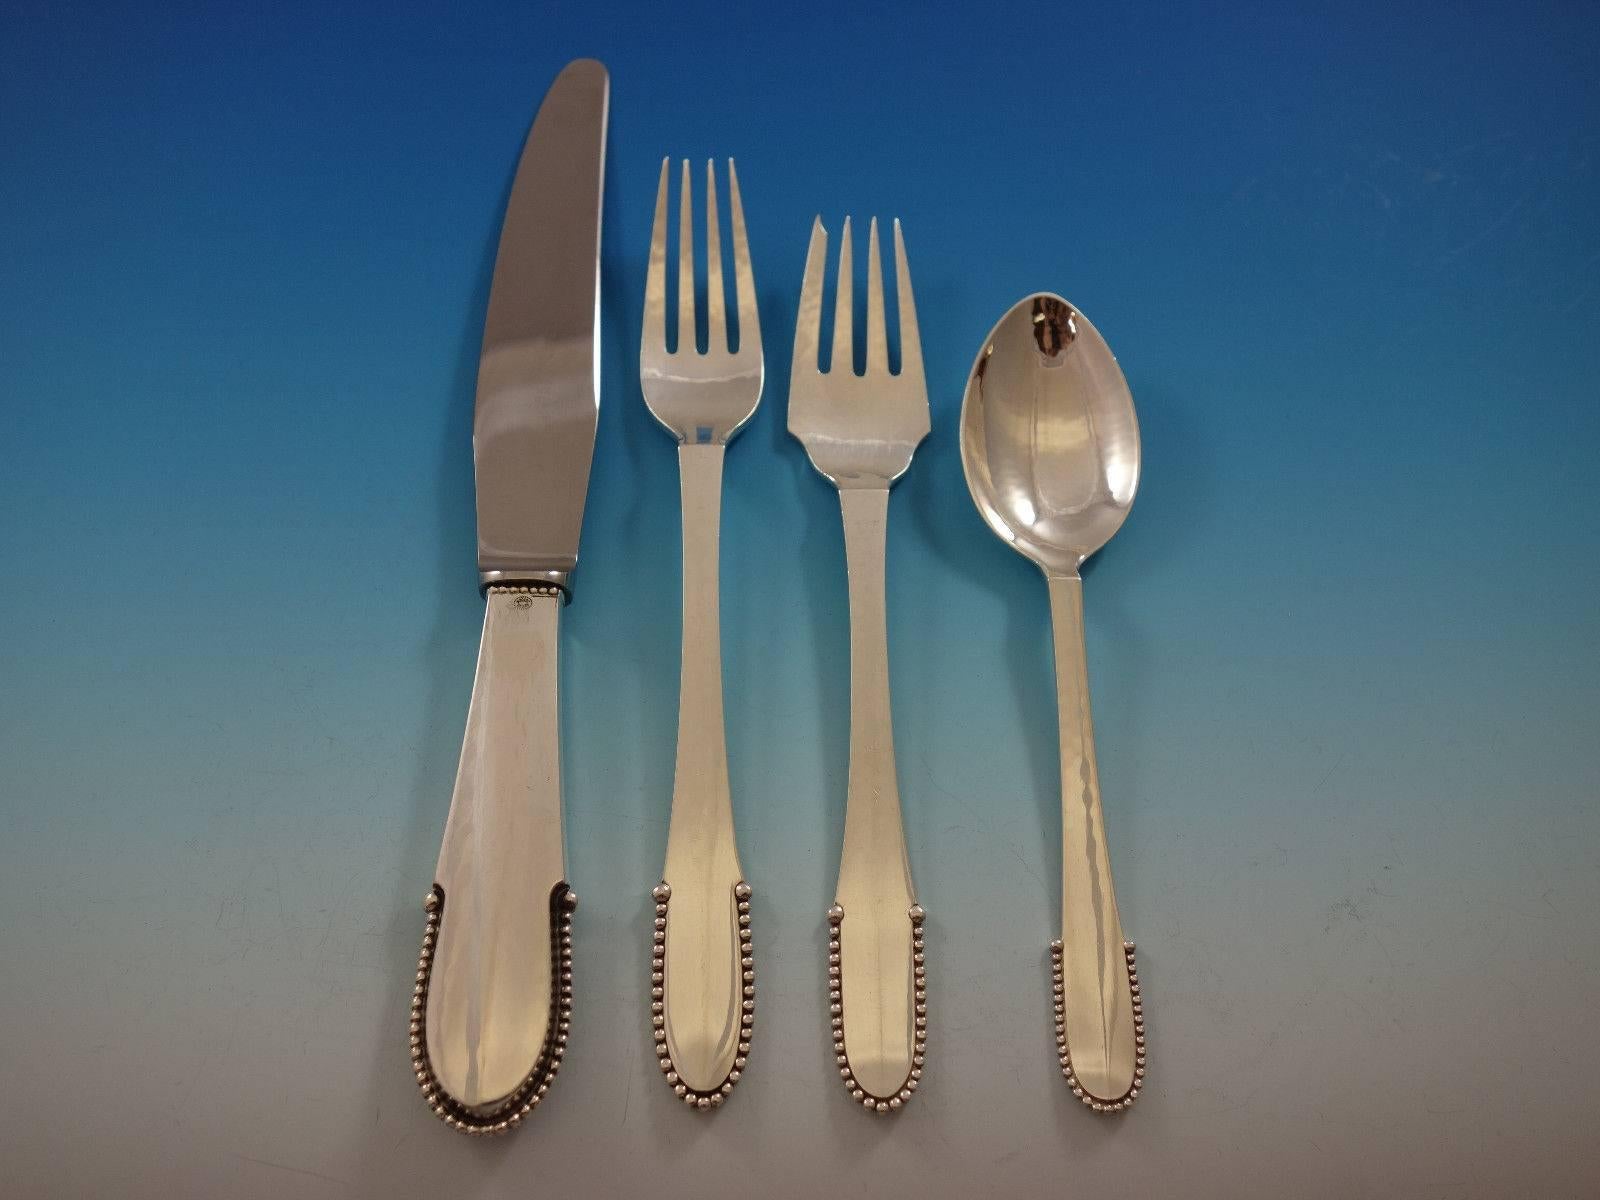 Beaded by Georg Jensen sterling silver flatware dinner set of 74 pieces. This set includes: 12 dinner knives, short wide handle, 8 7/8", 12 dinner forks, 7 1/8", 12 salad forks, 6 3/4", 12 teaspoons, 5 7/8", 12 tea knives, 6